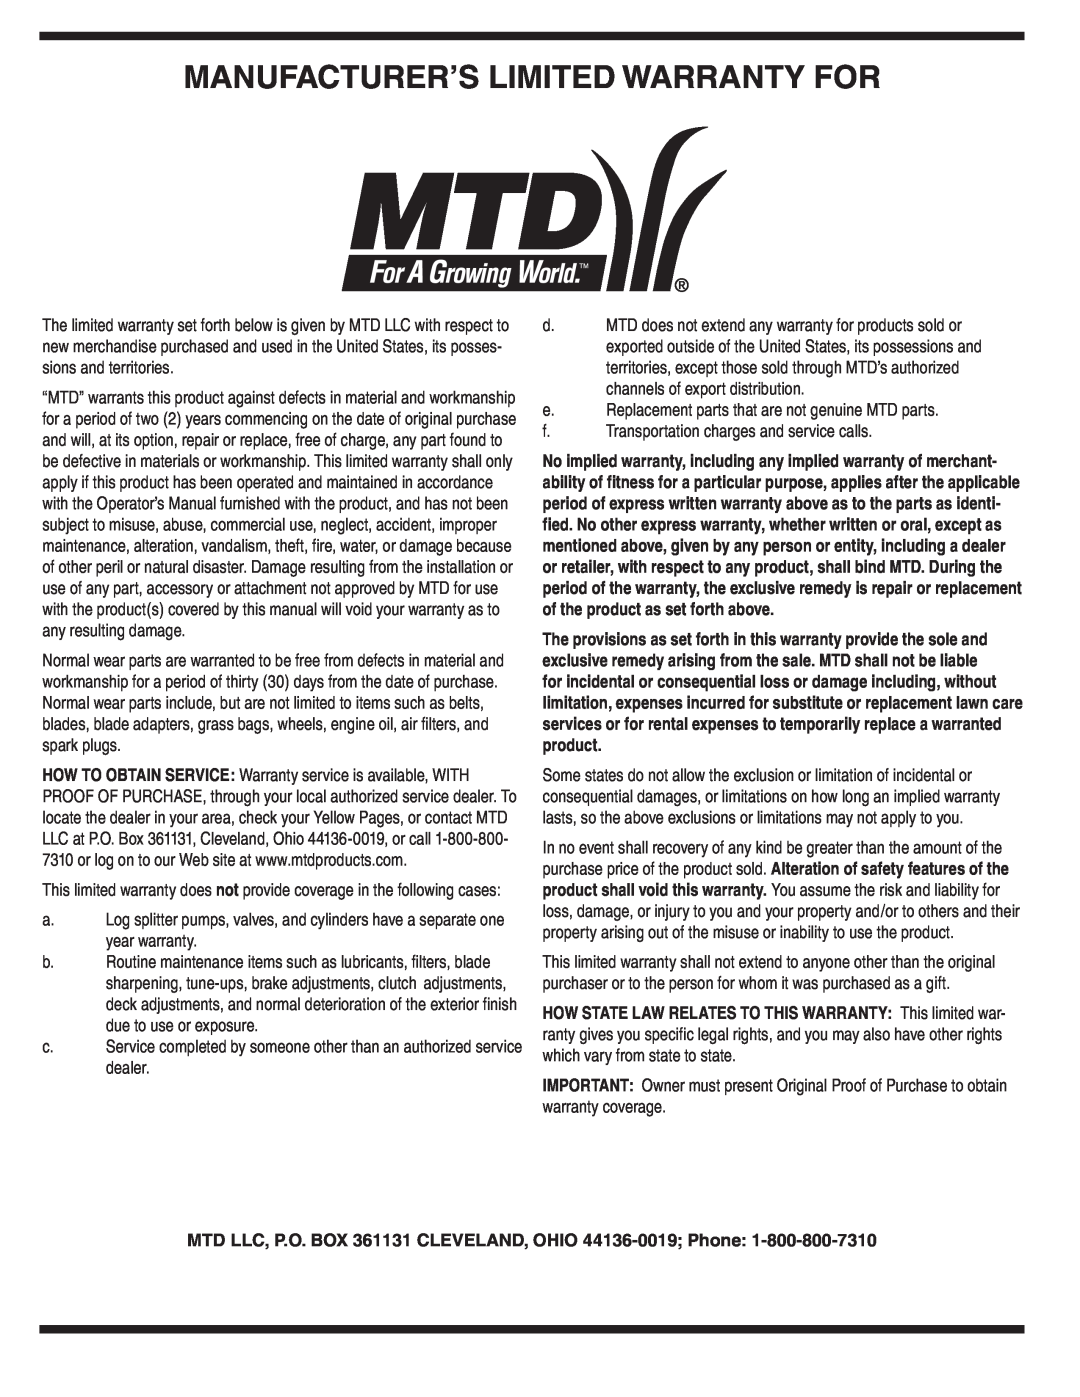 MTD 44M warranty Manufacturer’S Limited Warranty For, MTD LLC, P.O. BOX 361131 CLEVELAND, OHIO 44136-0019 Phone 